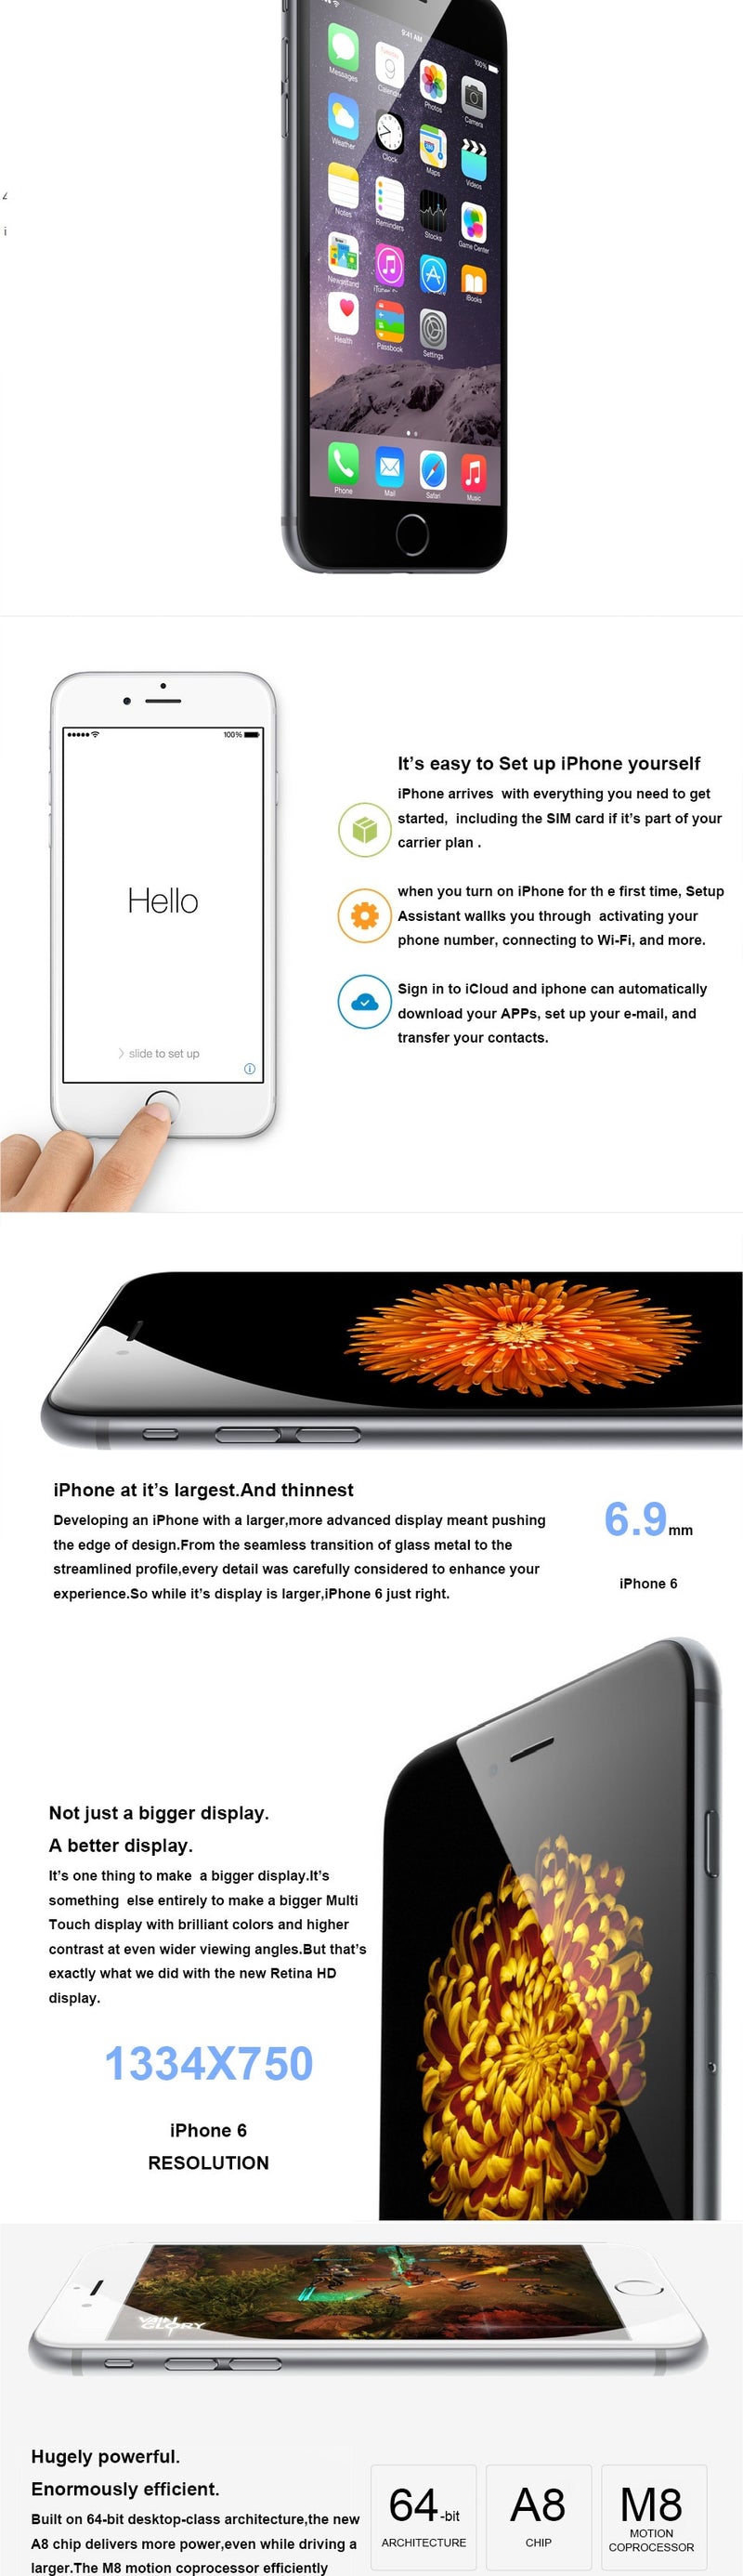 unlocked apple iphone 6 dual core ios mobile phone 4.7' ips 1gb